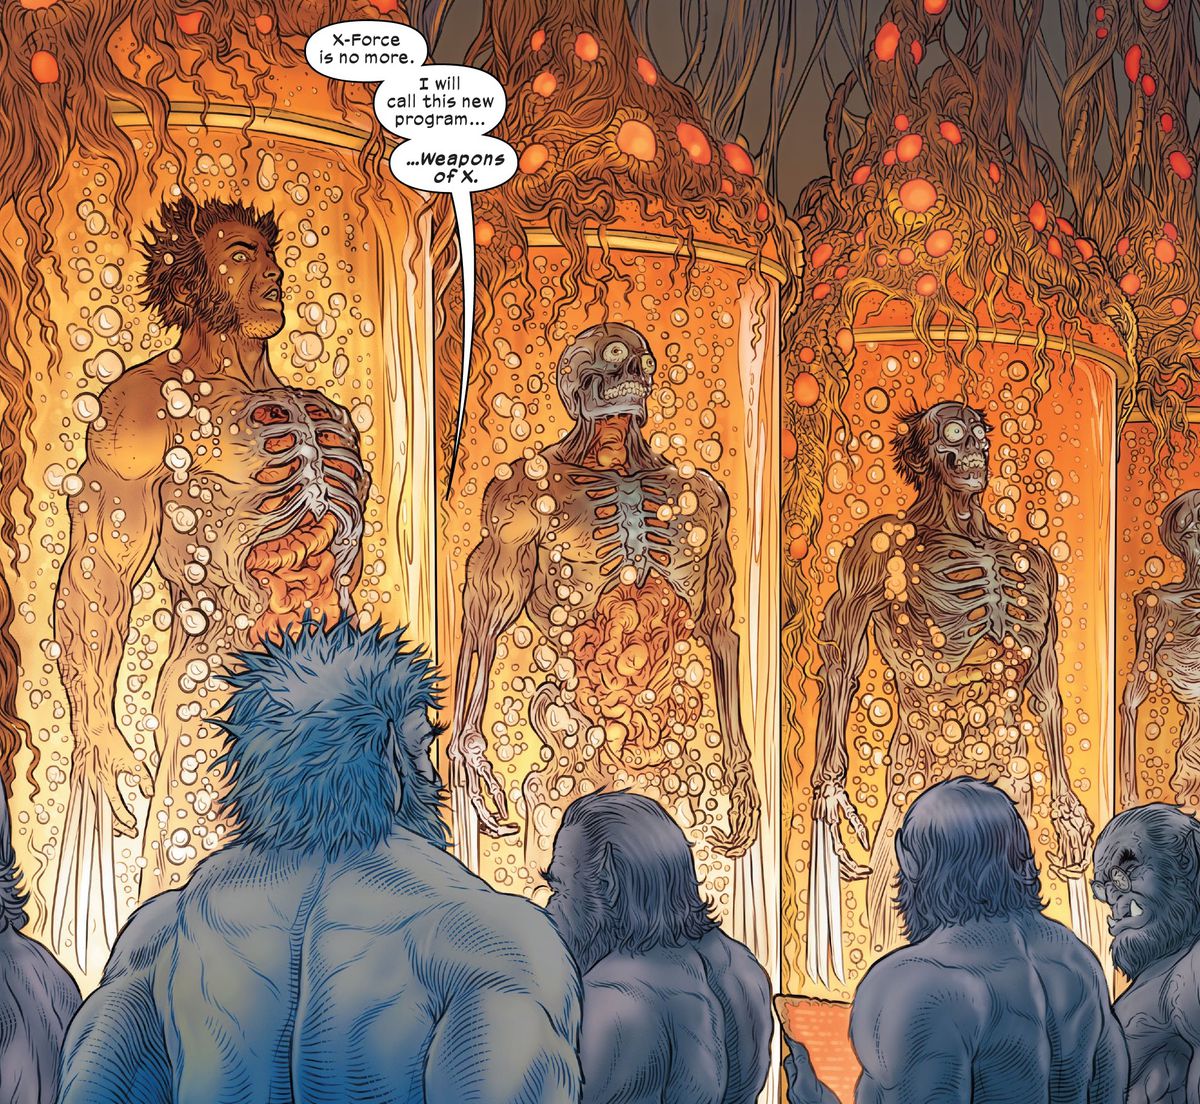 "X-Force는 더 이상 존재하지 않습니다." Beast는 성장하는 울버린 클론의 여러 통을 감독하는 다른 Beast 클론 31명에게 말합니다. Wolverine #2023(XNUMX)에서 "나는 이 새로운 프로그램을... Weapons of X라고 부를 것입니다."